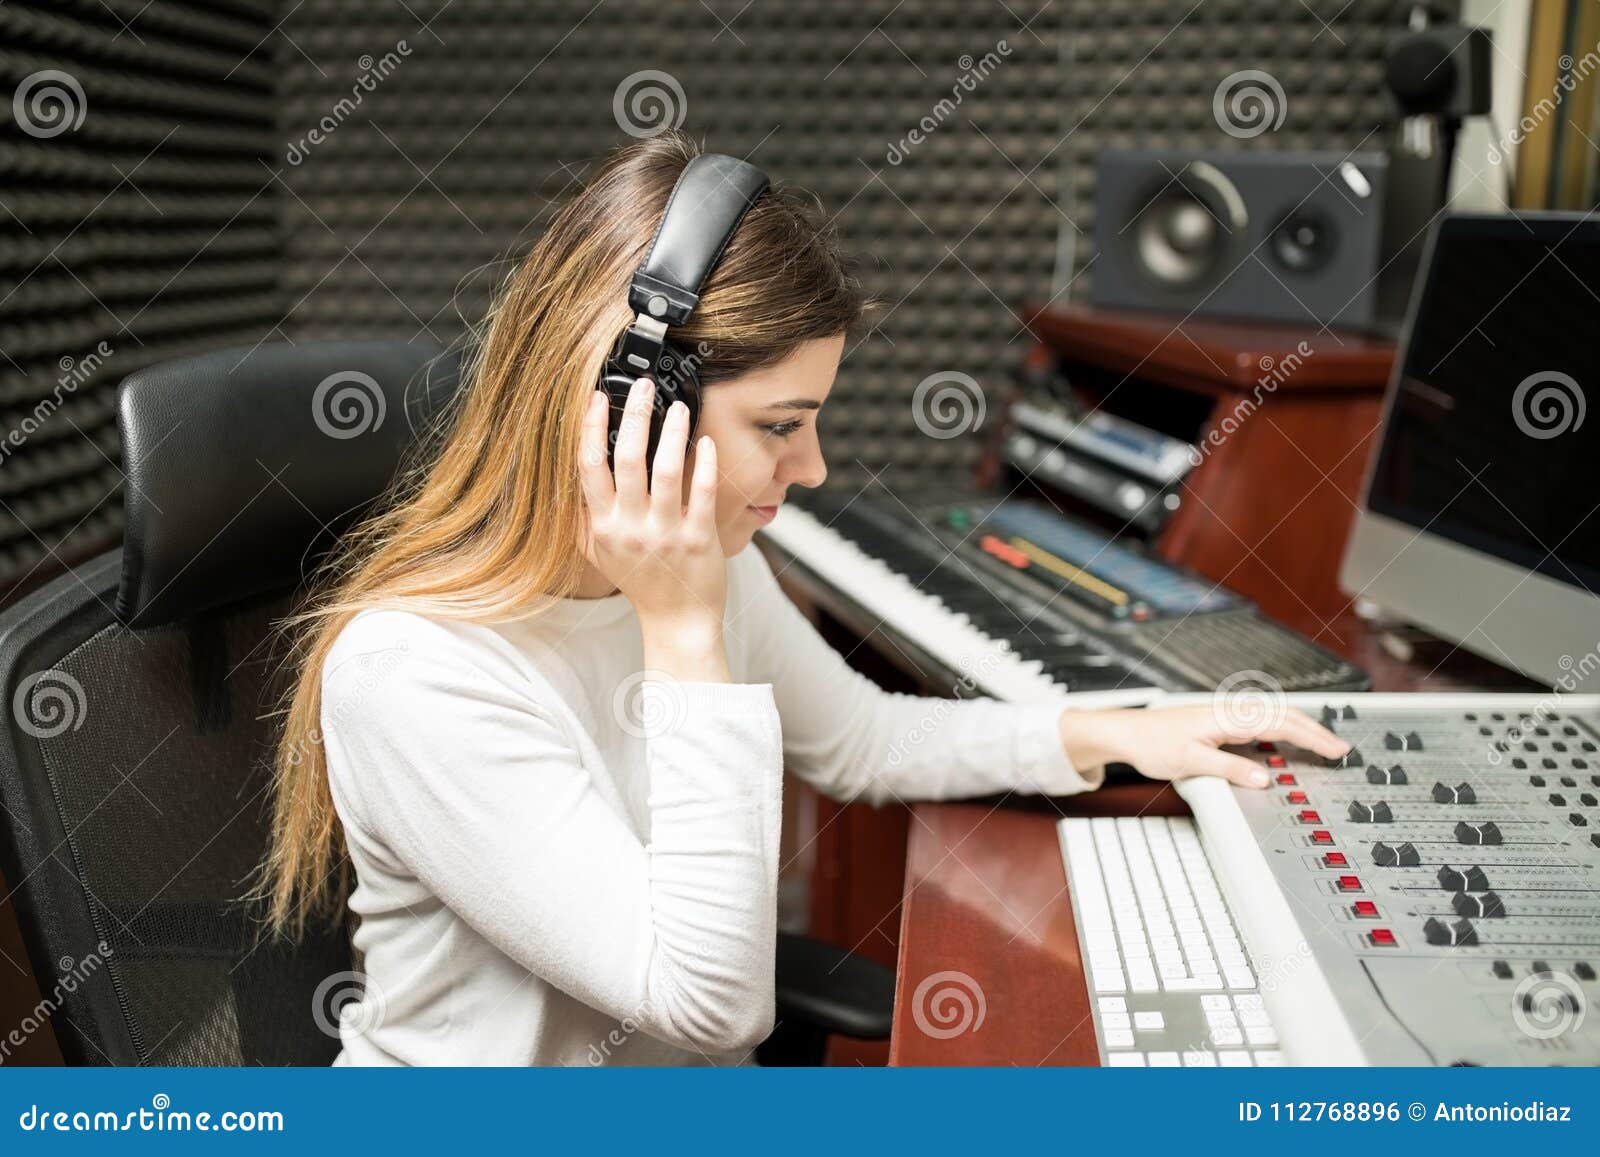 female composer listening her new track